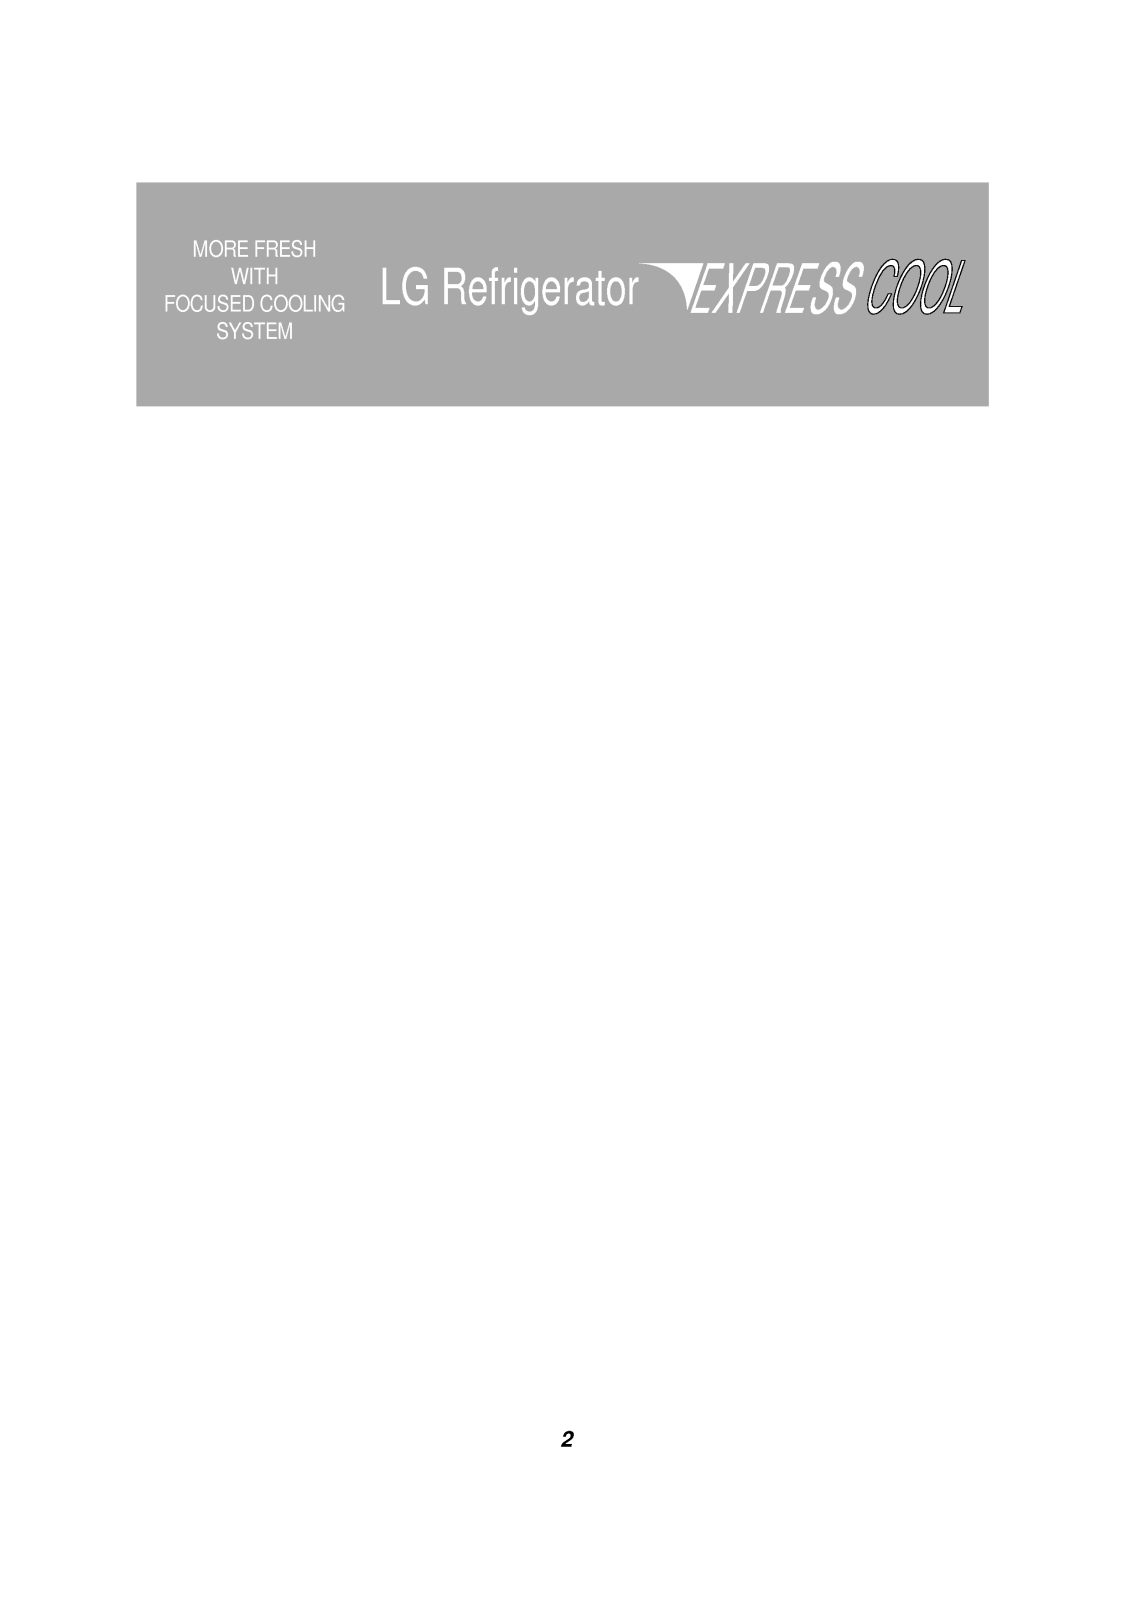 LG BK 9702 NF, GR-642BEQF, 8188 NF, 8190 NF, LR-762DEPF User Manual